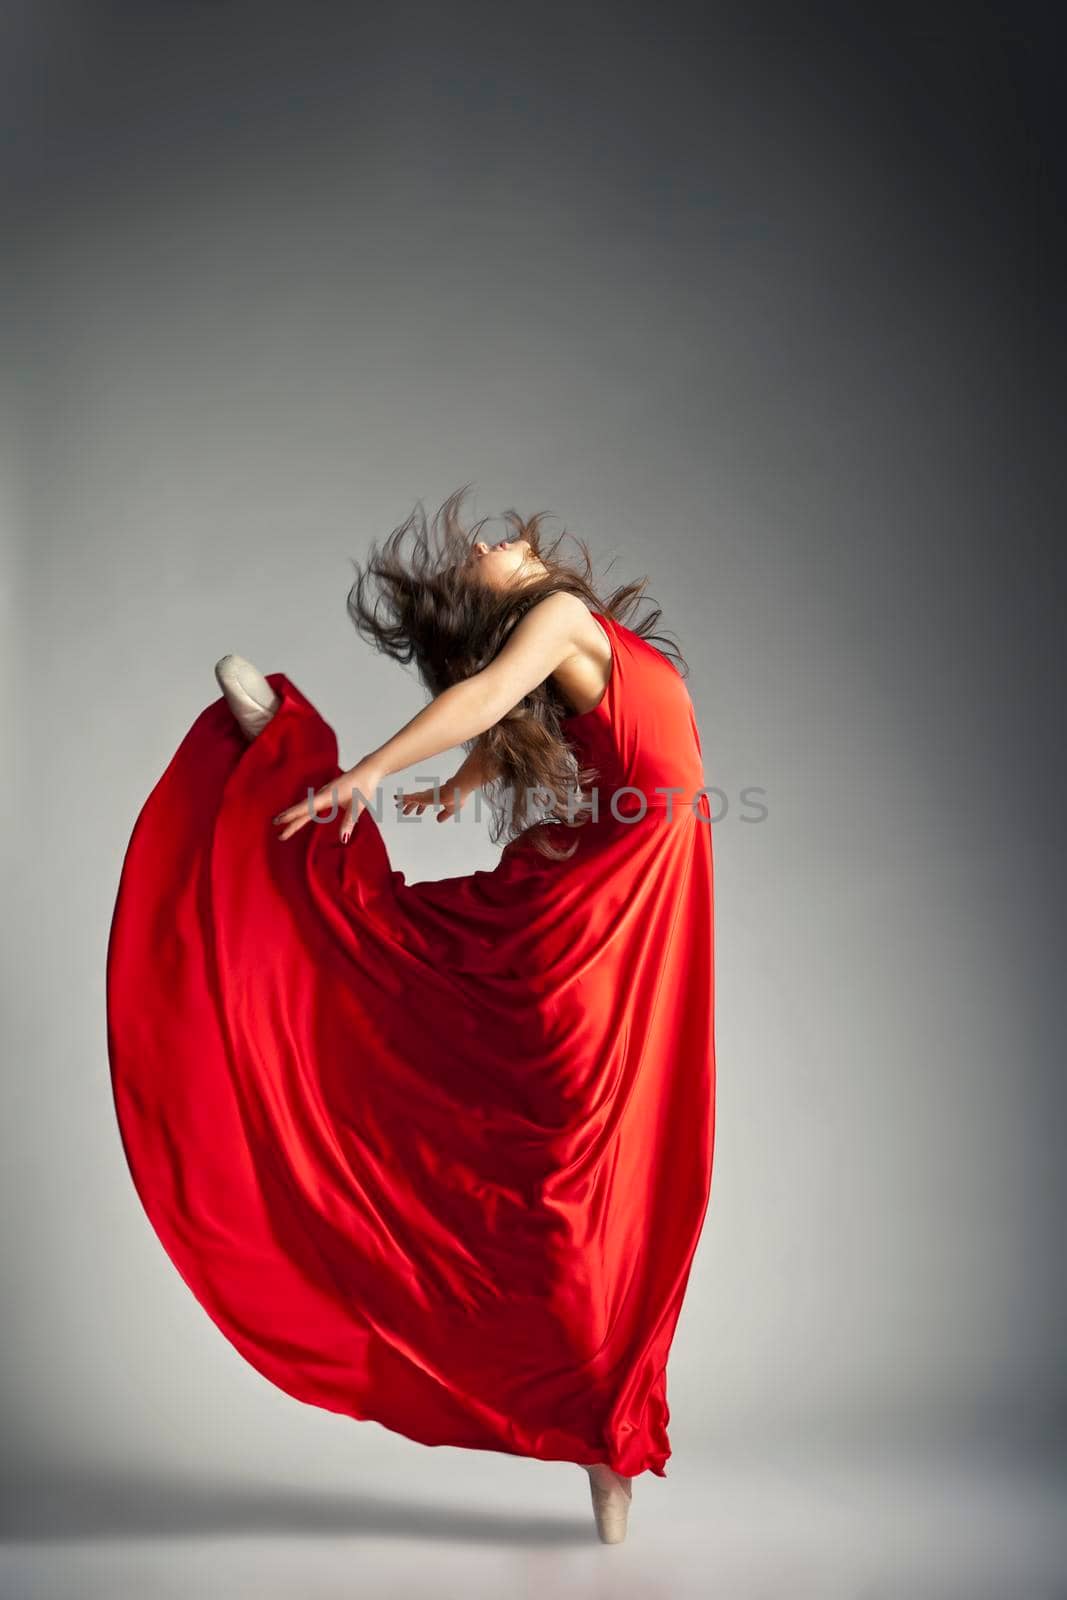 Ballet dancer wearing red dress over grey by Julenochek